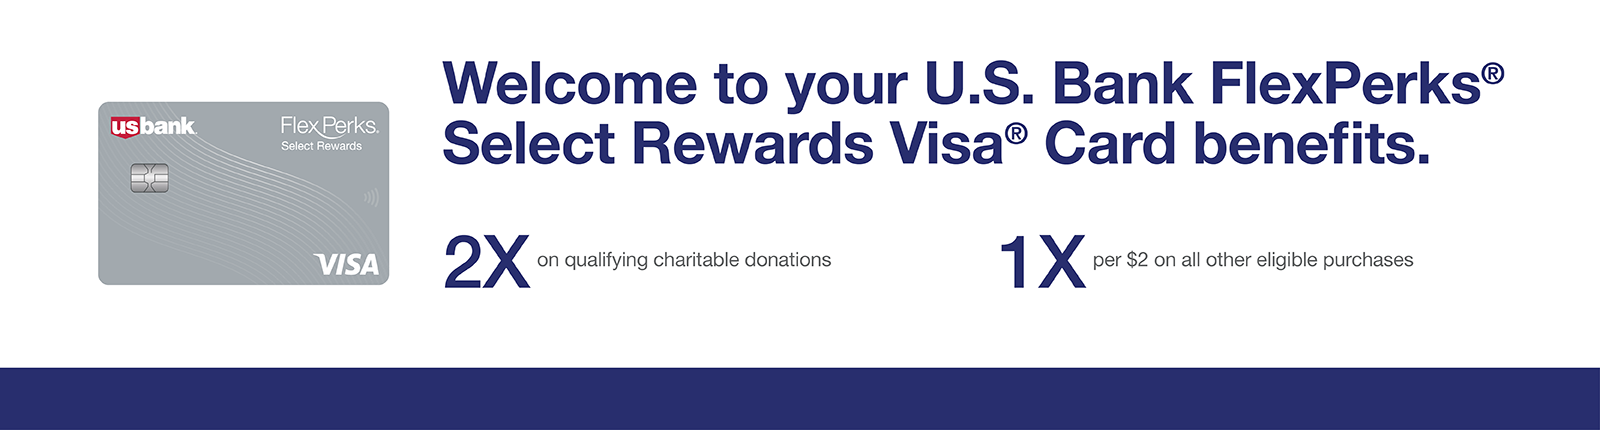 U.S. Bank FlexPerks® Select Rewards Visa® Card